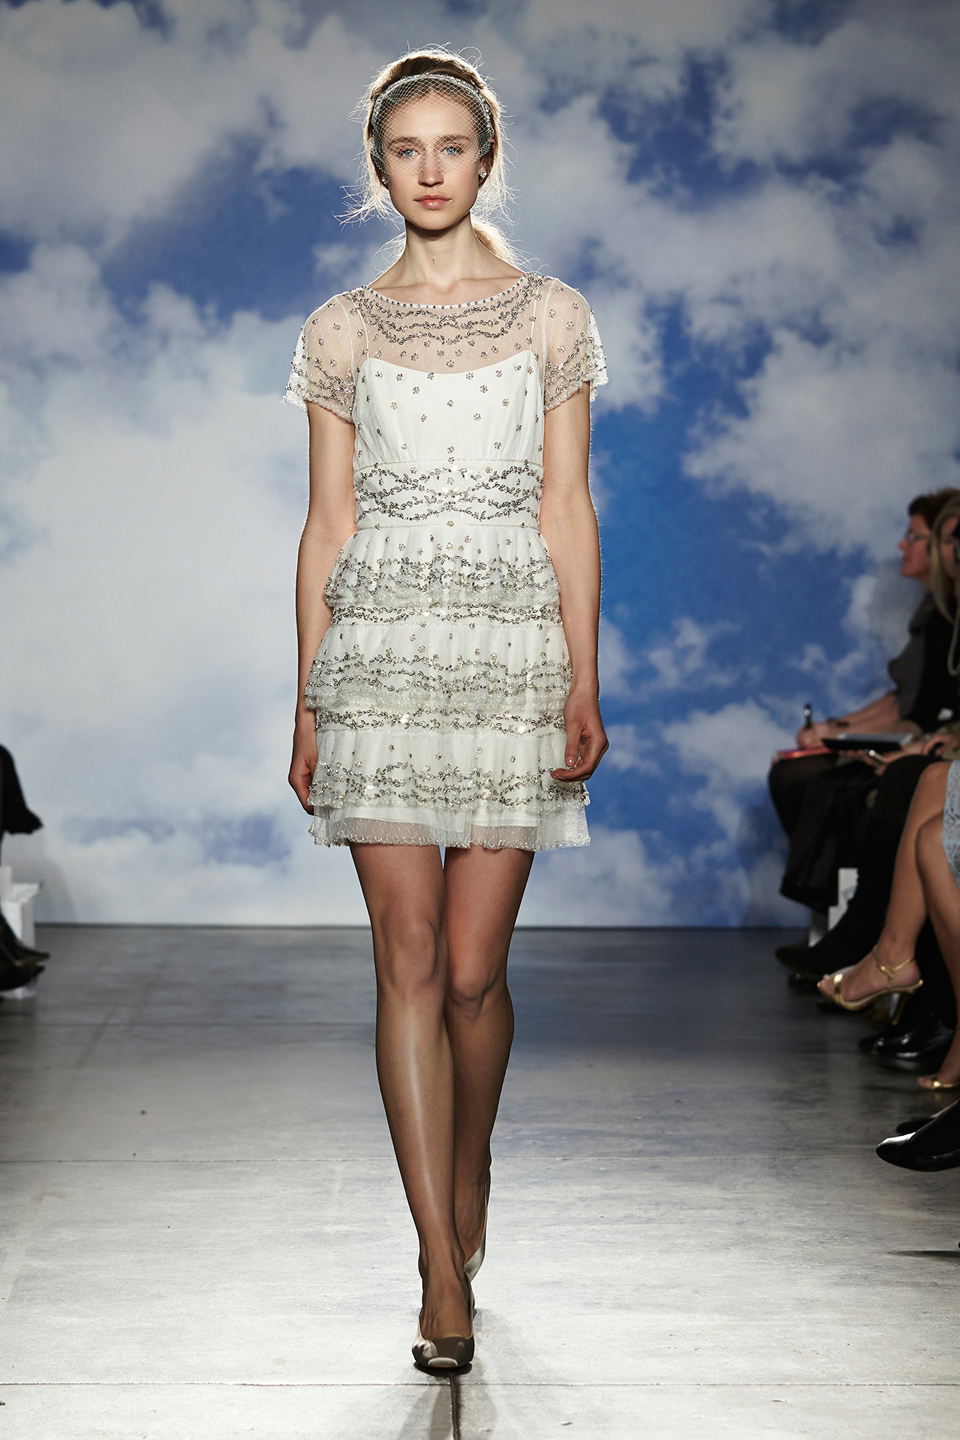 Jenny Packham 2015 Bridal Wear Collection, as showecased at New York Bridal Market, April 2014